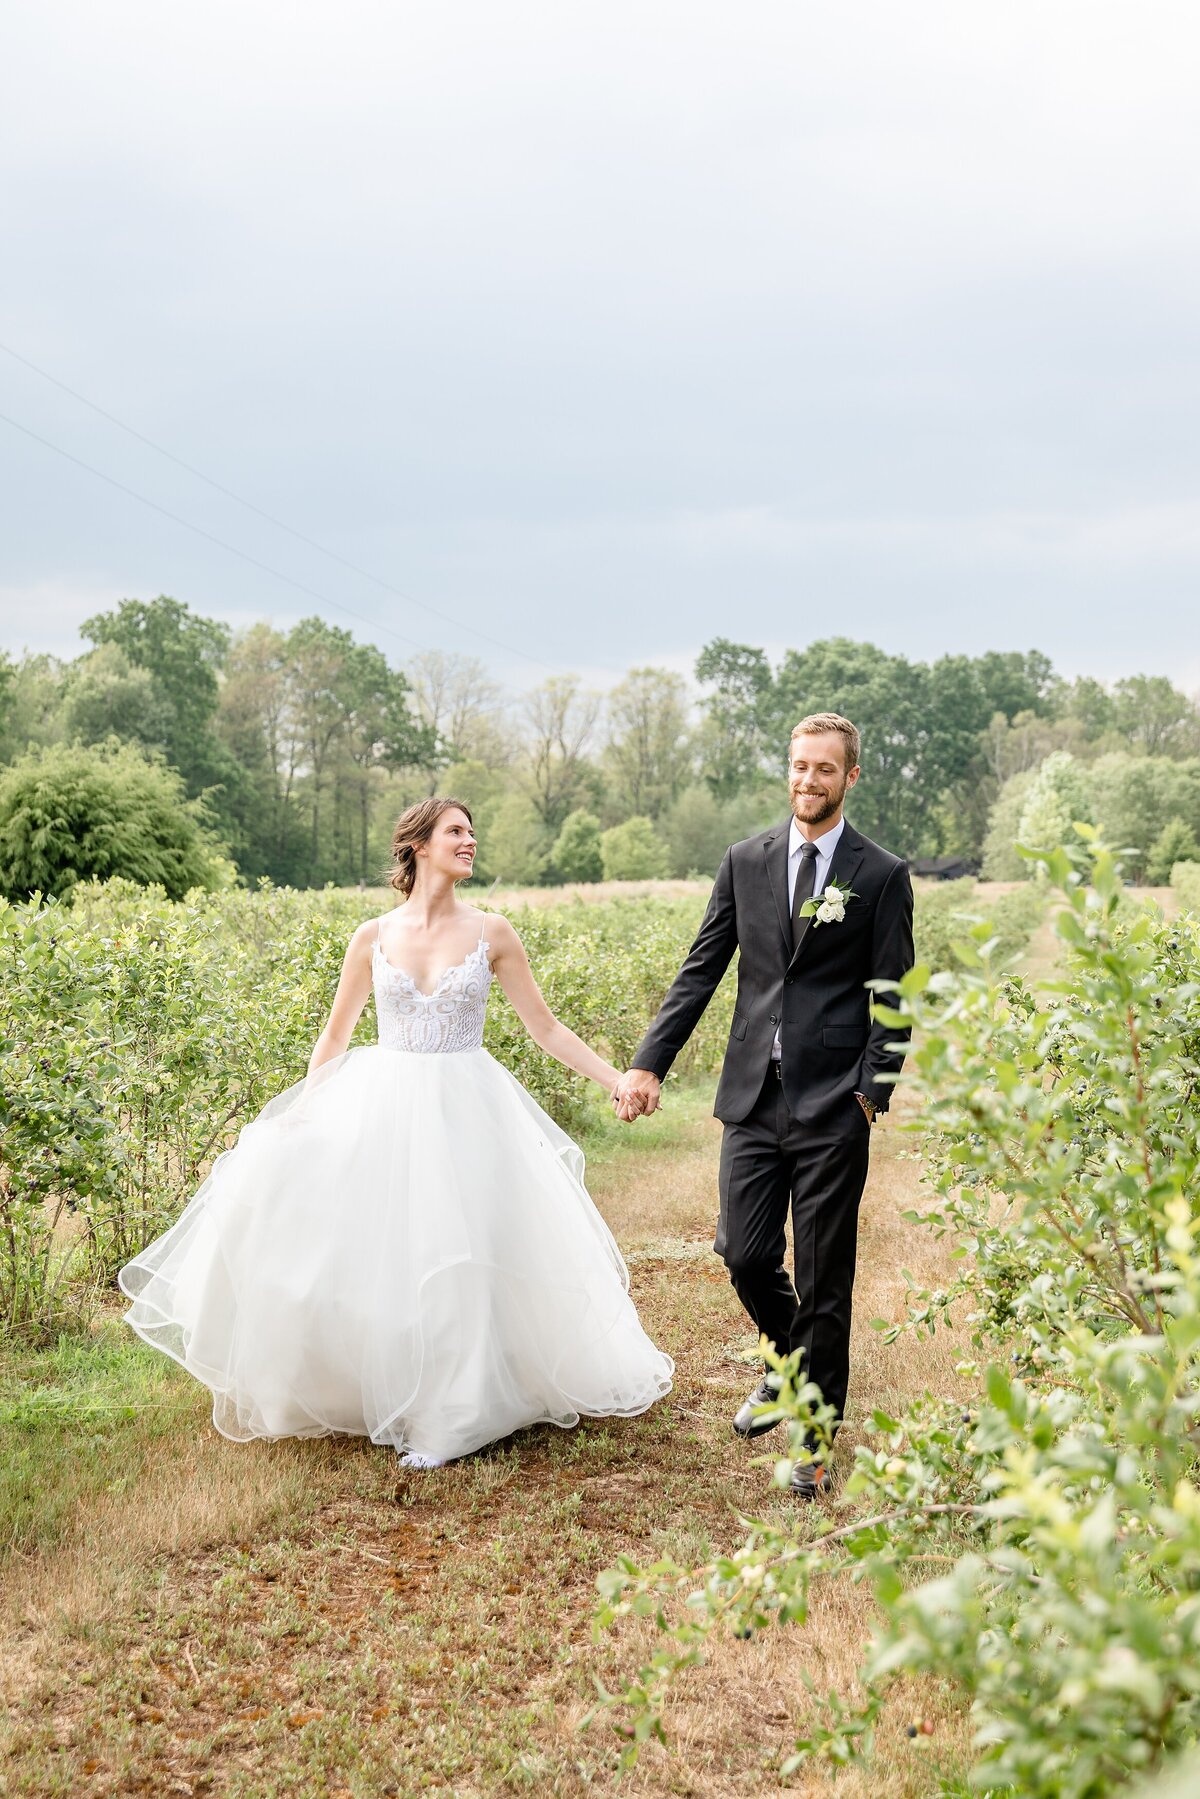 Intimate Arrowwood Farms Harvest Table Wedding | Dylan & Sandra Photography -28